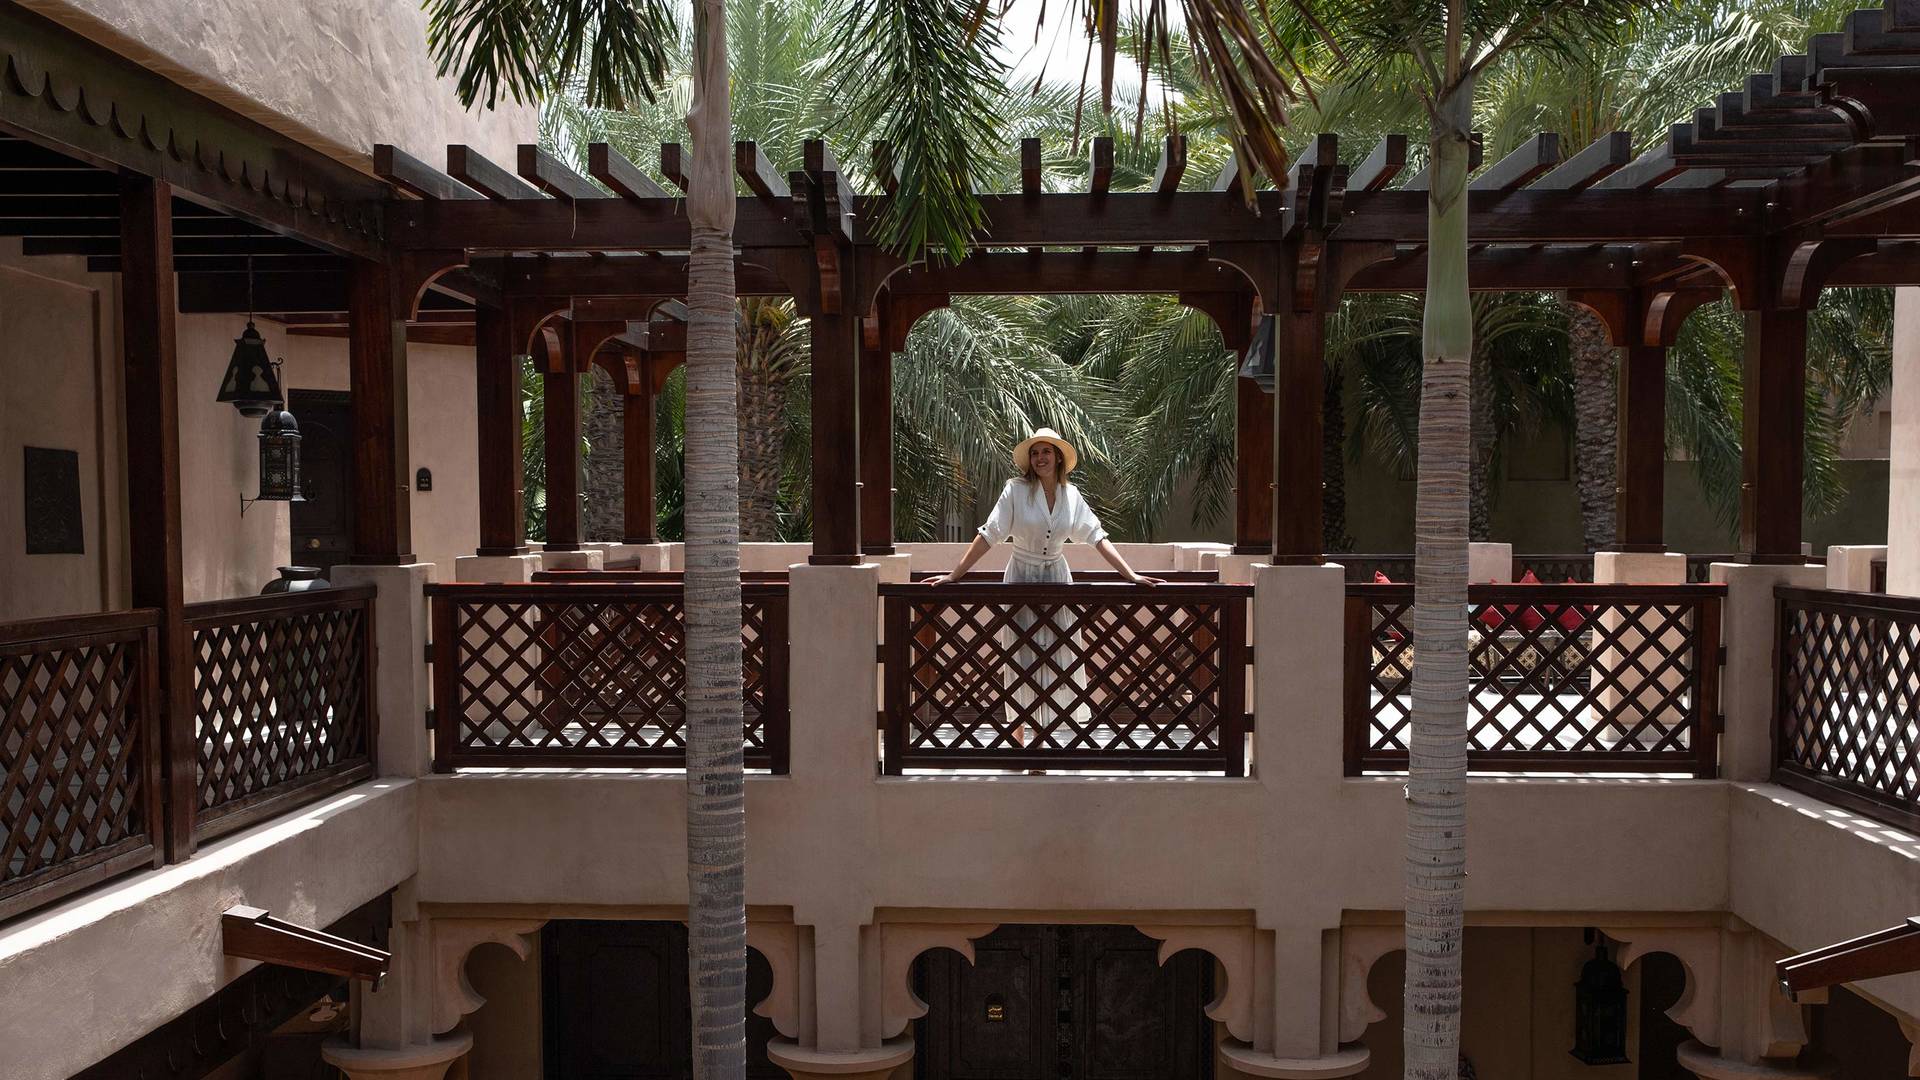 Lady on the balcony at the Jumeirah Dar Al Masayaf hotel